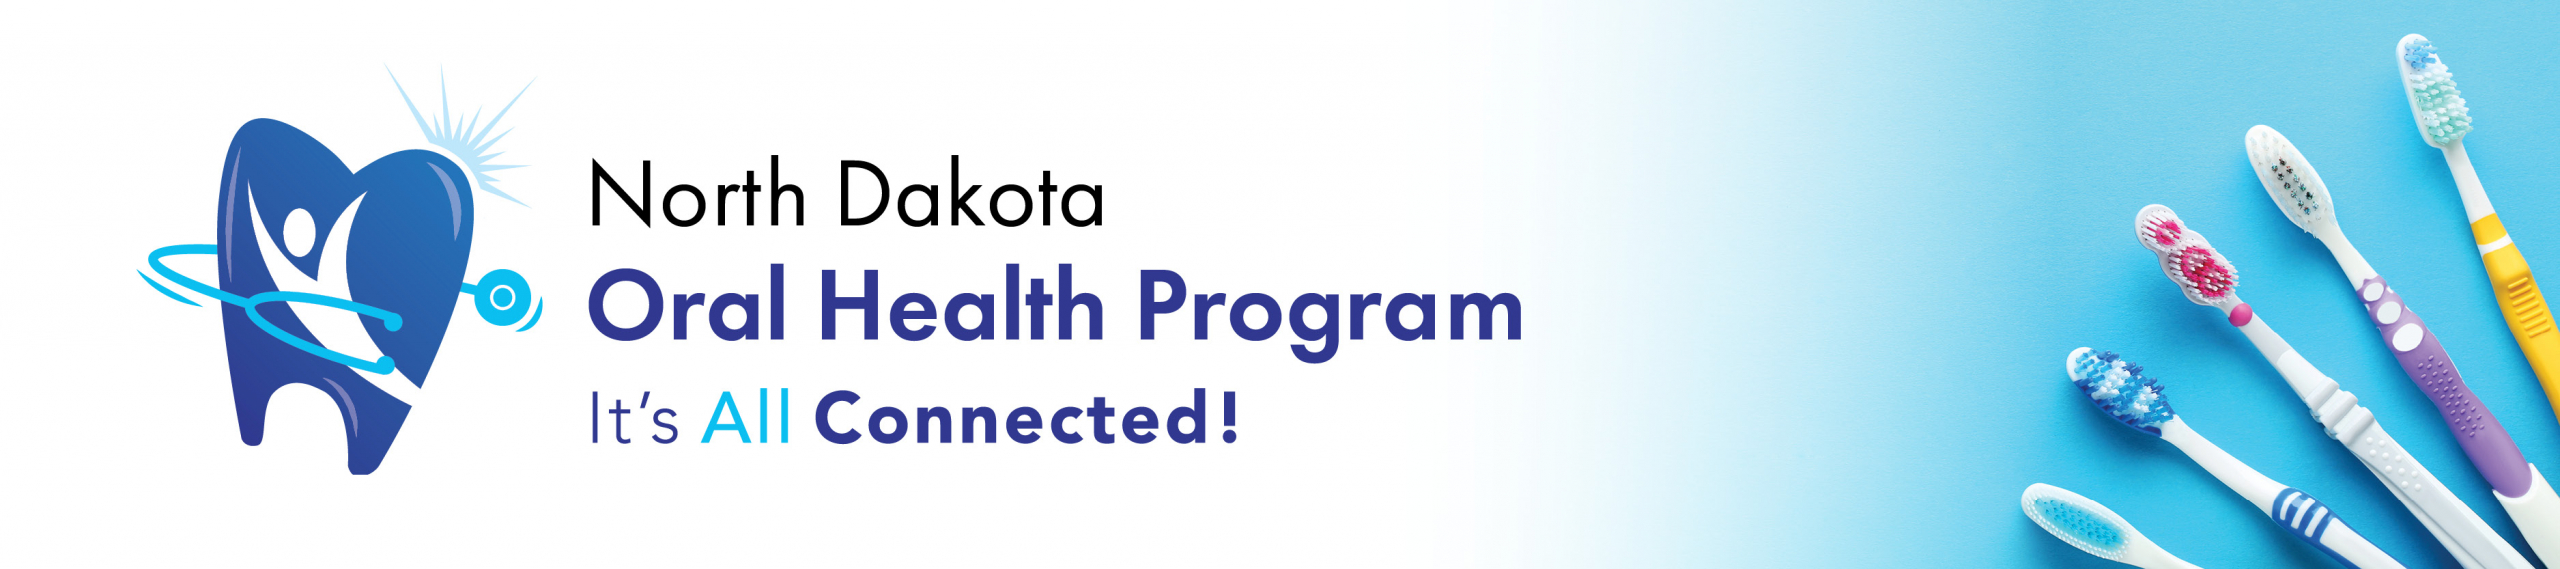 North Dakota Oral Health Program